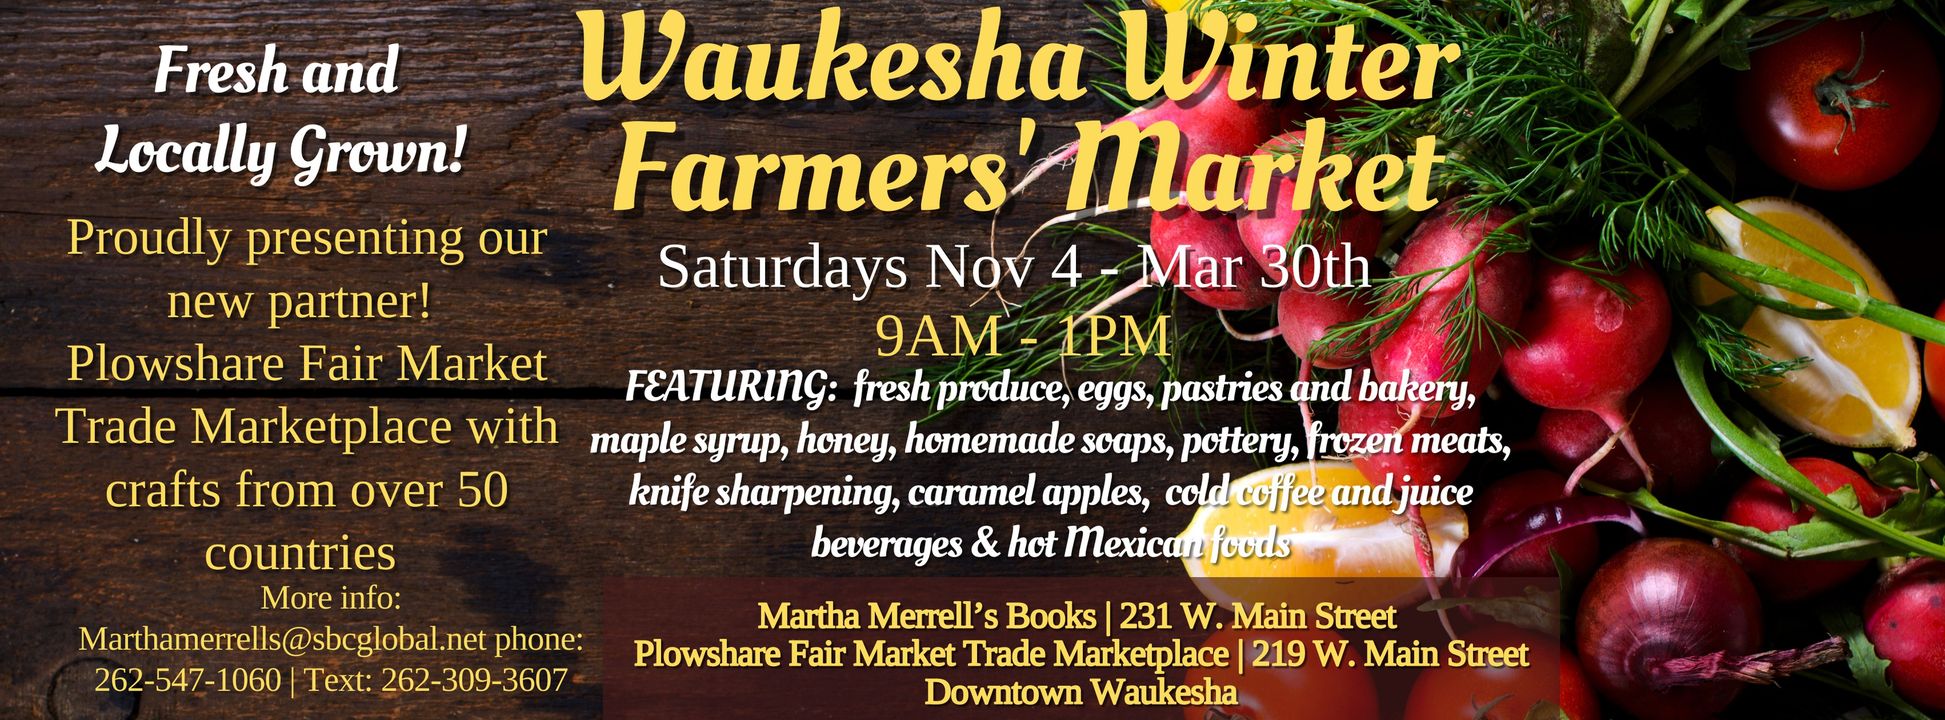 Waukesha Winter Farmer's Market banner image